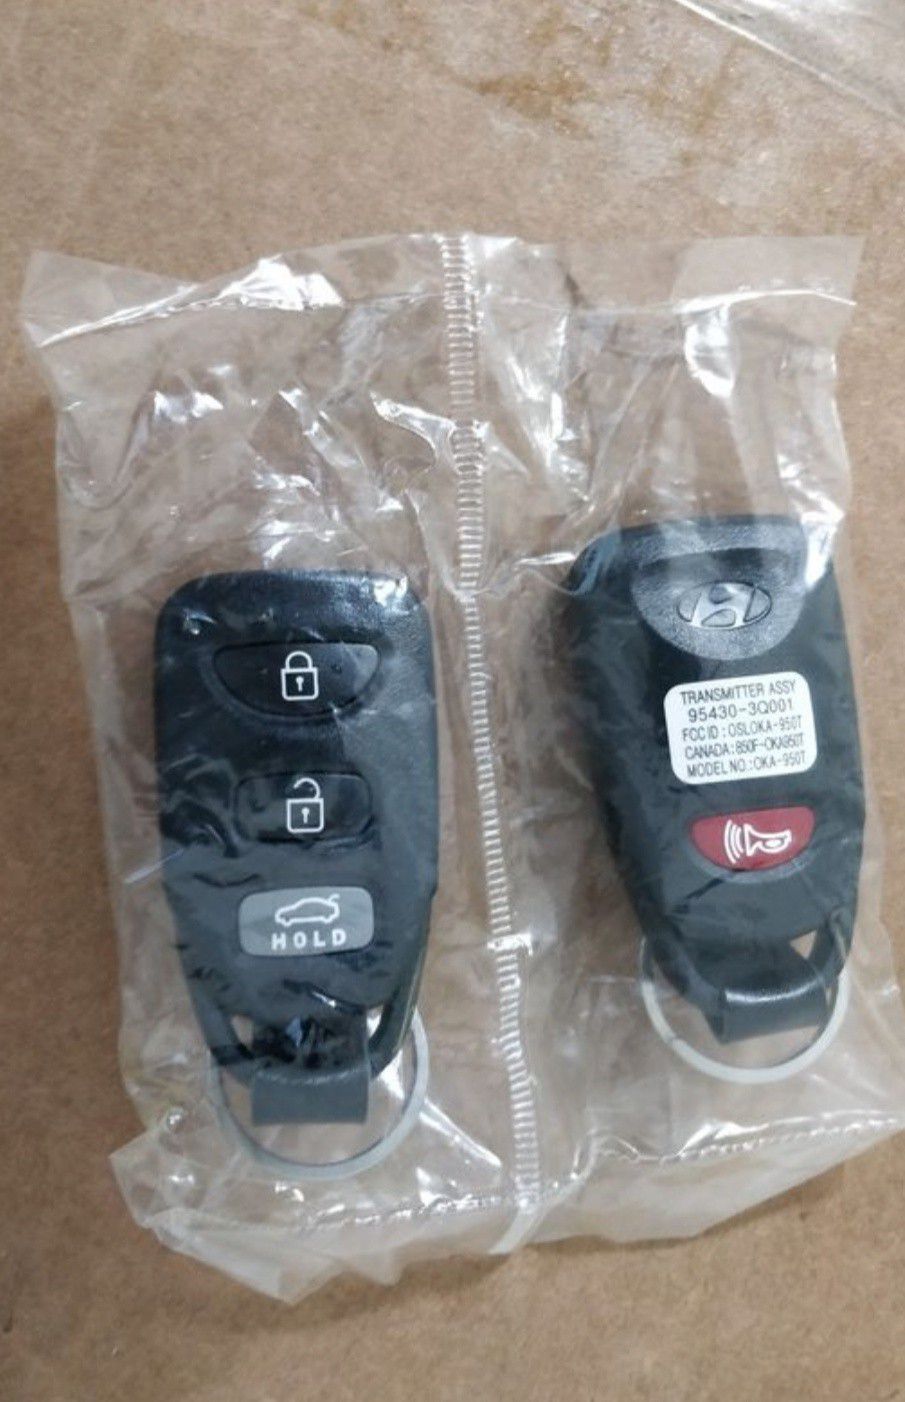 2 NEW Hyundai Key Fobs Sealed in Plastic Bag Remote Alarm